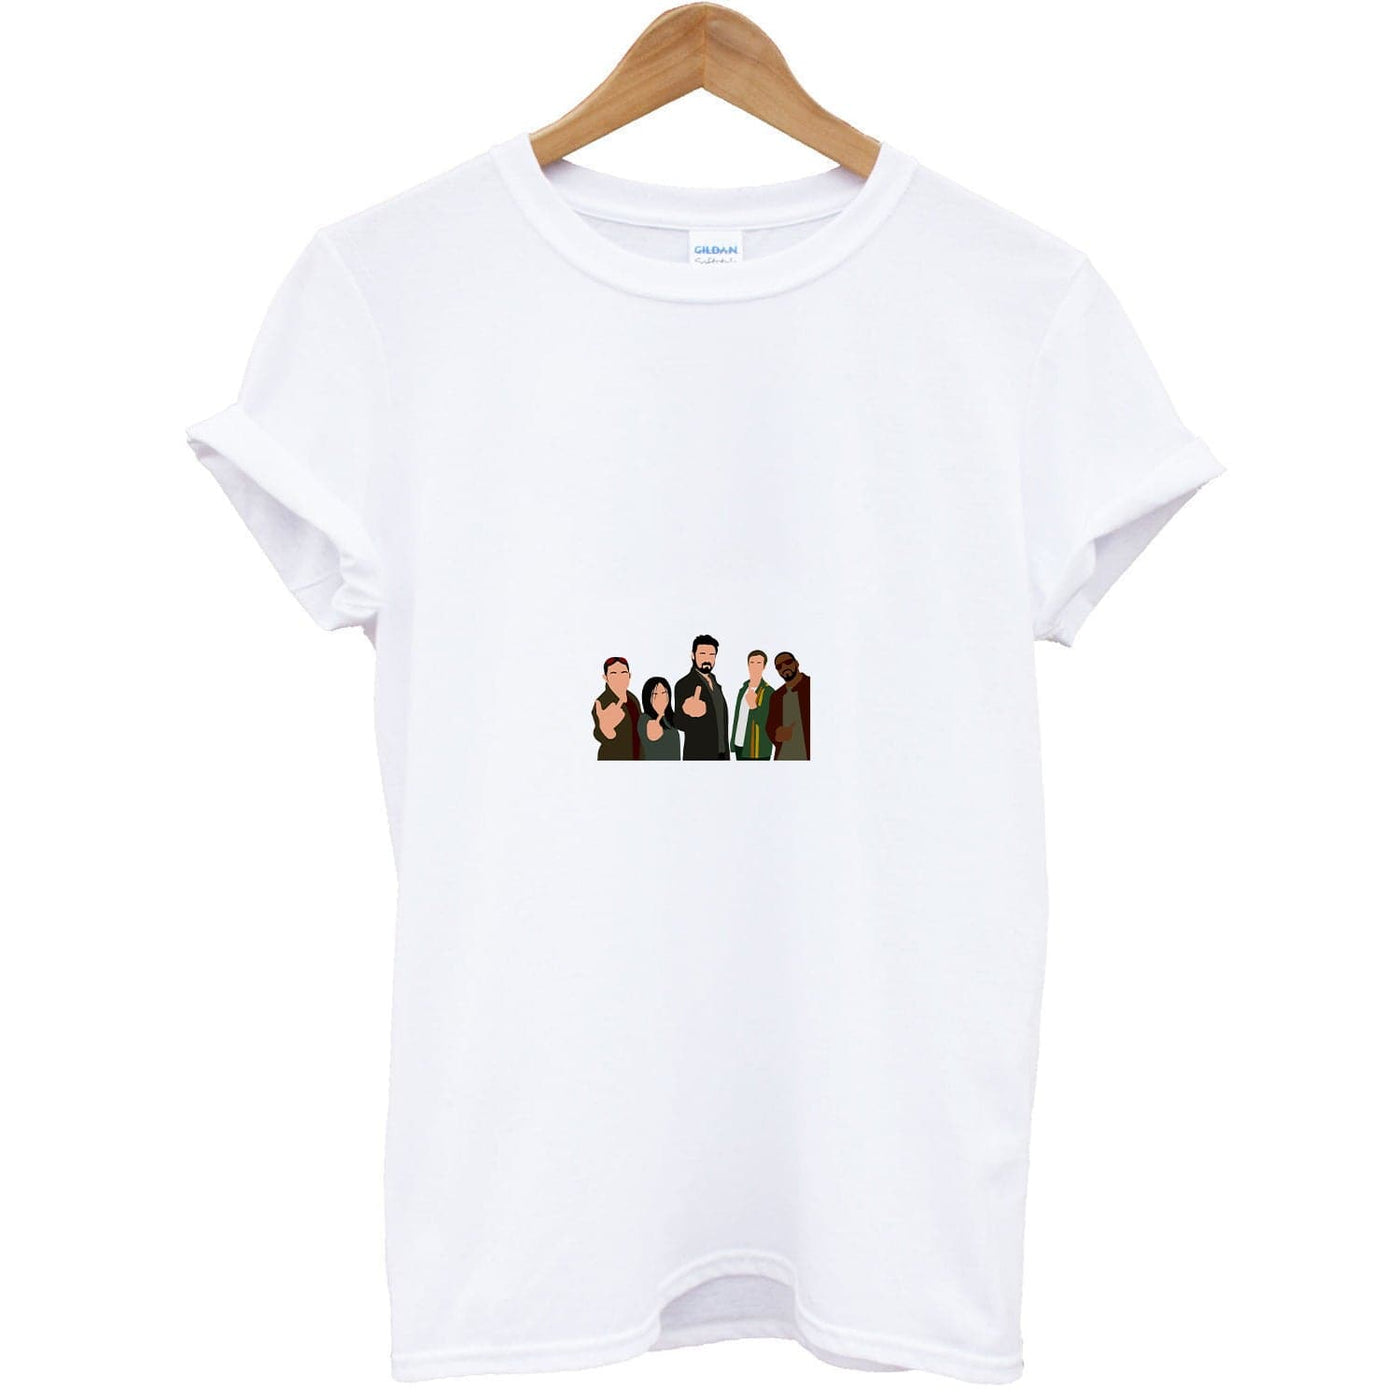 The Boys T-Shirt